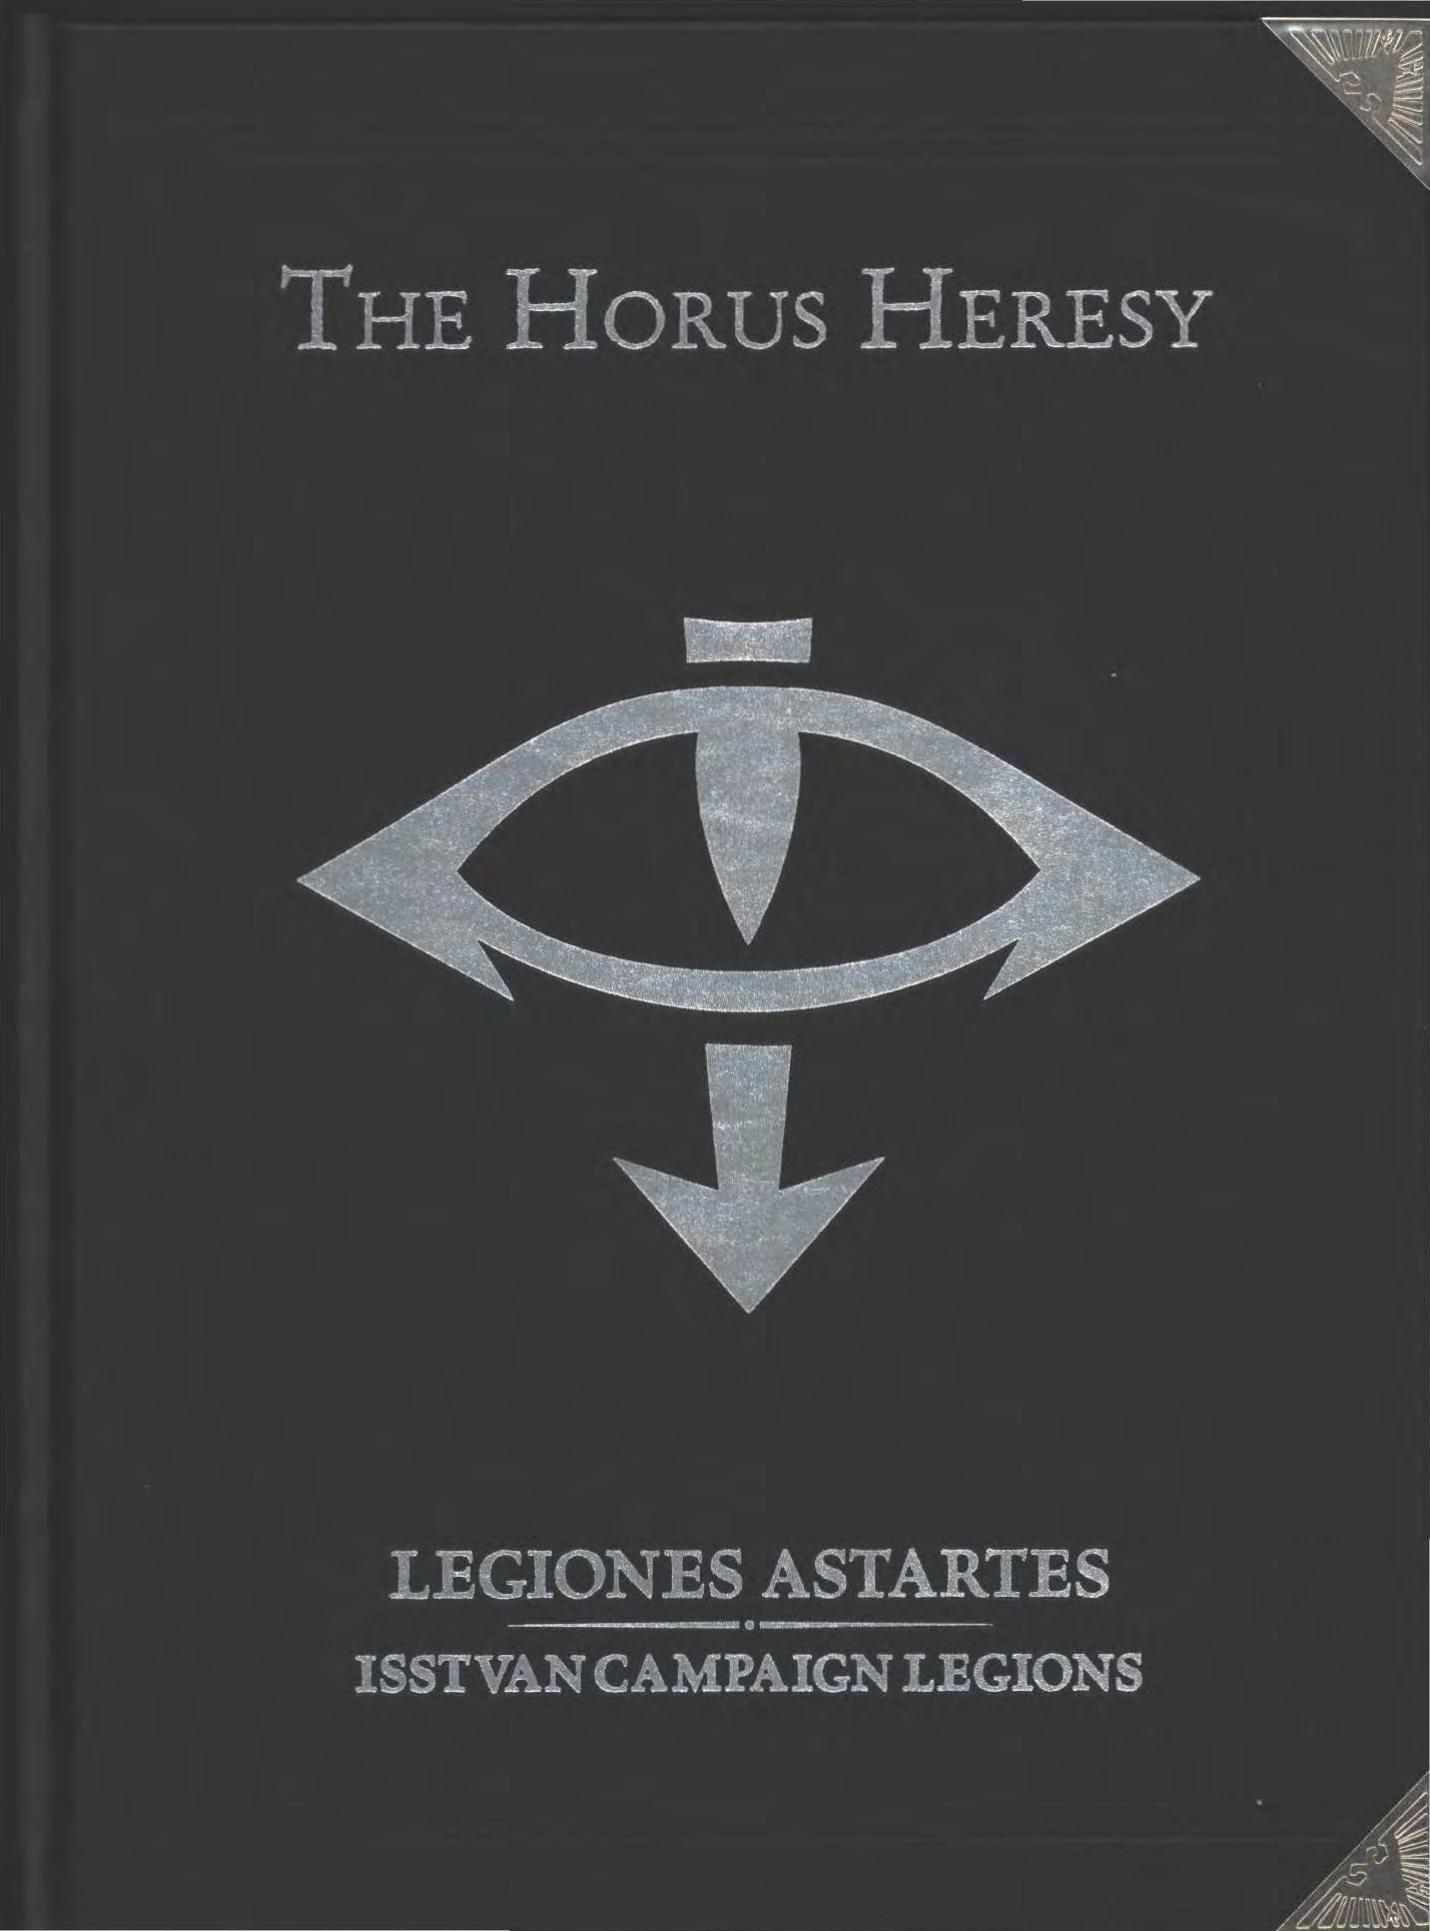 The Horus Heresy Legiones Astartes Isstvan Campaign